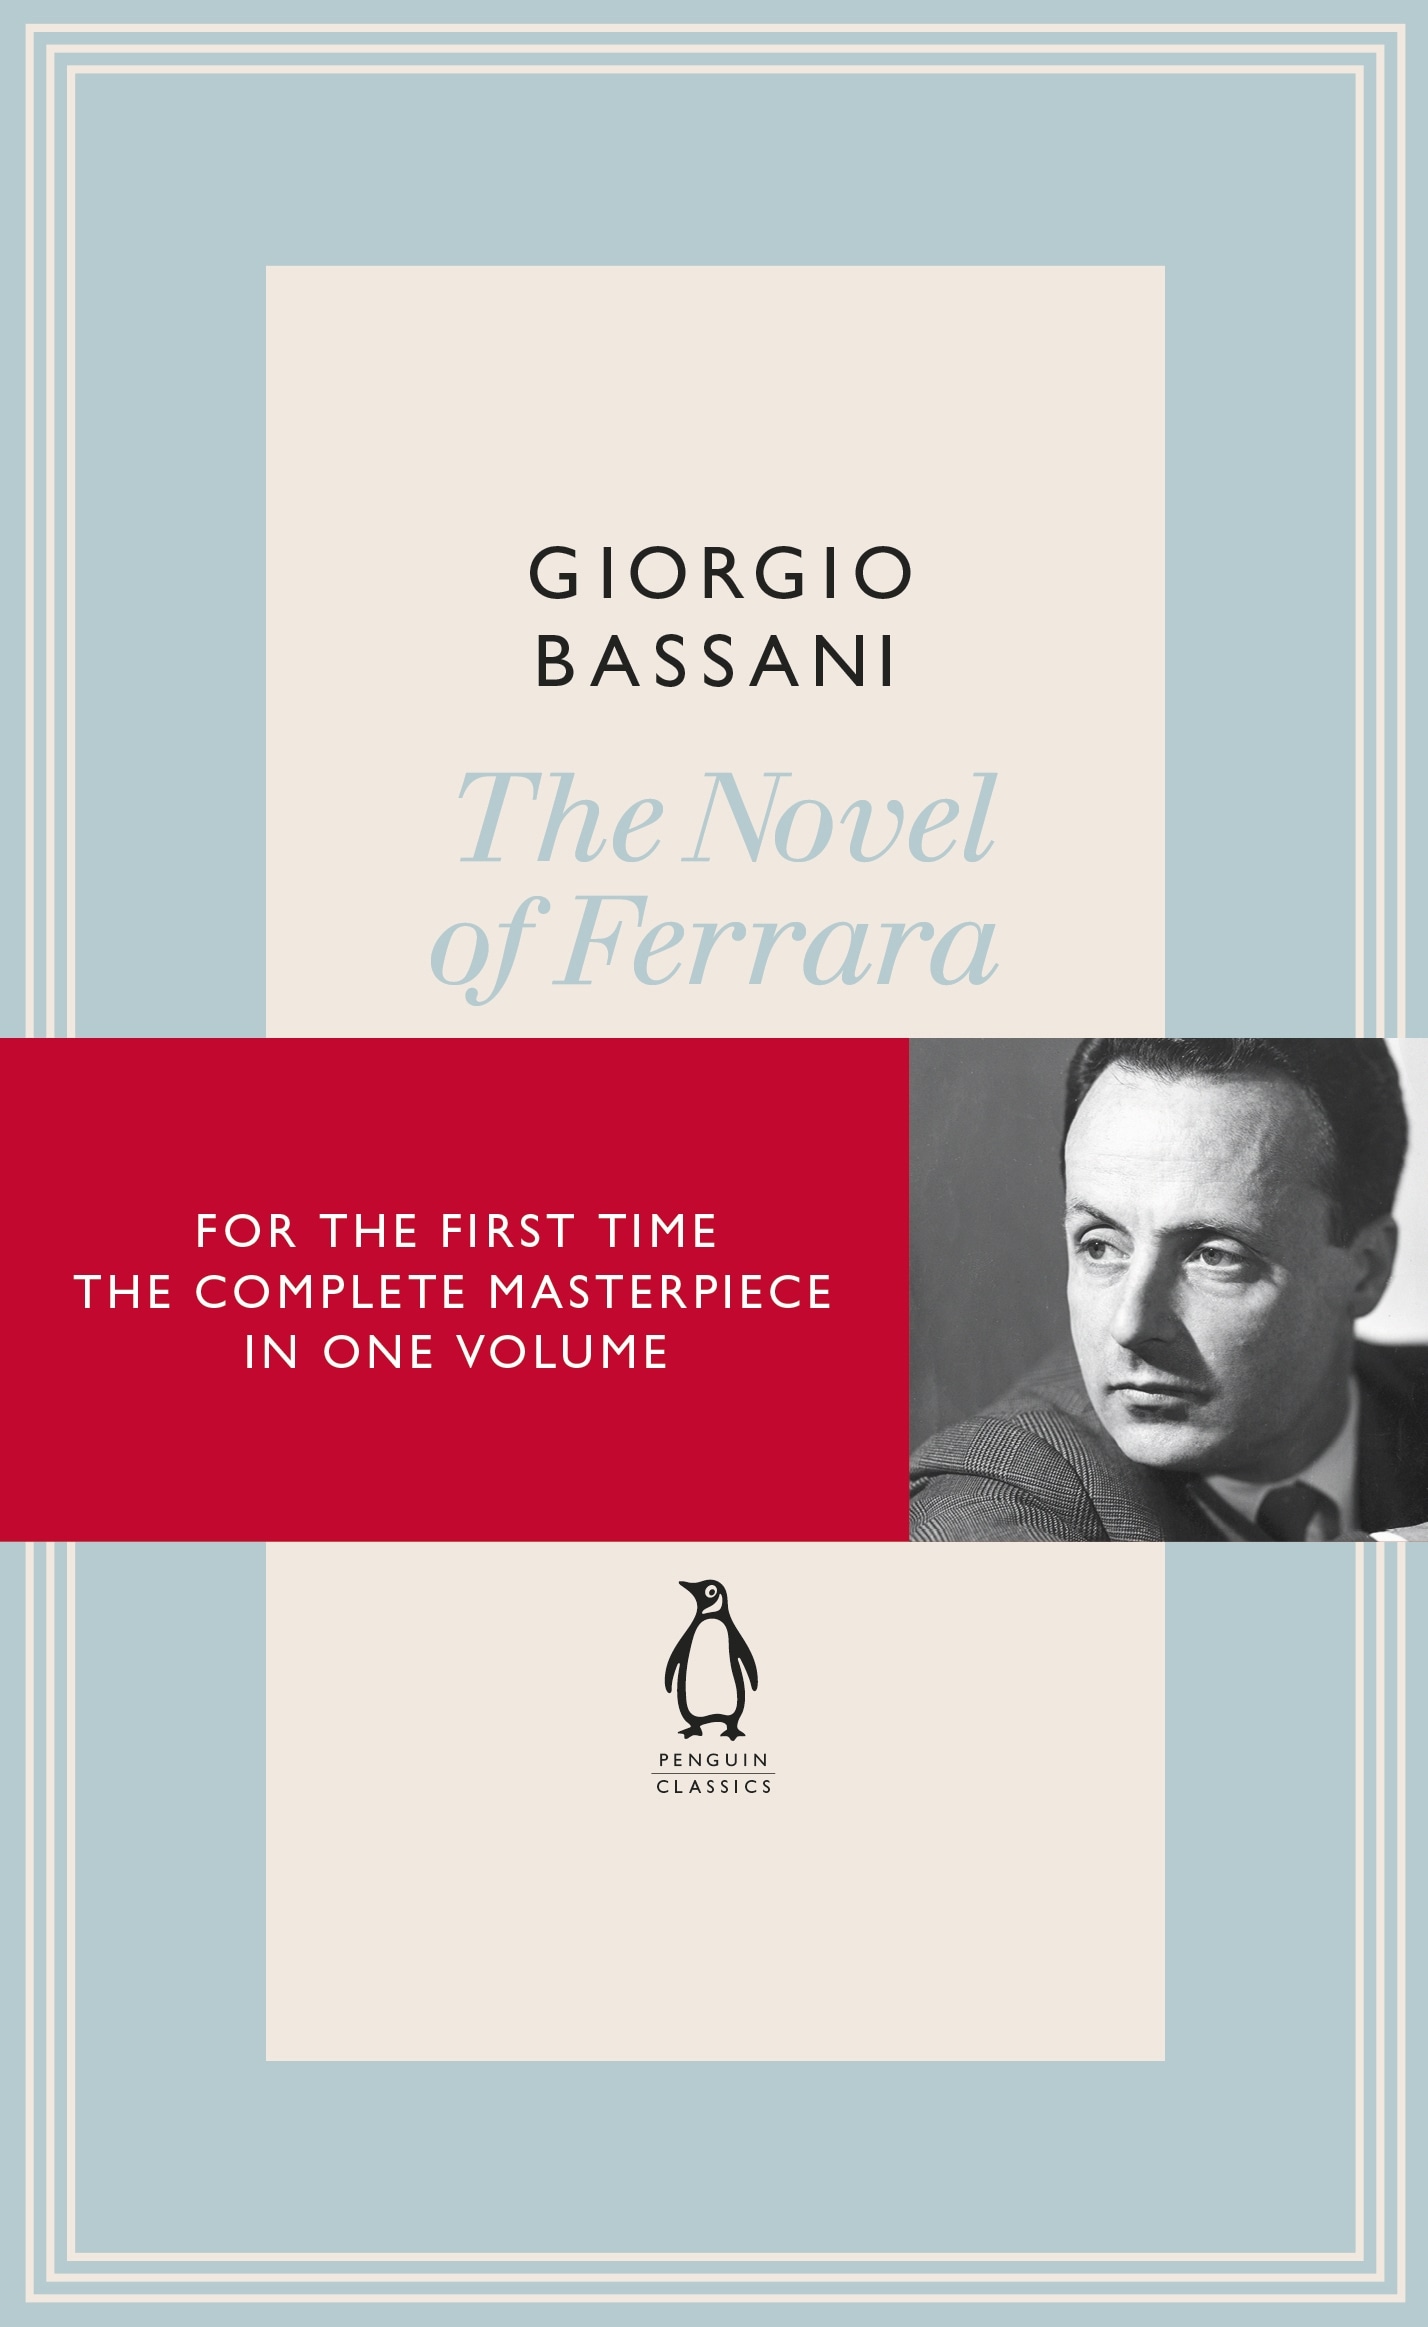 Book “The Novel of Ferrara” by Giorgio Bassani — October 16, 2018